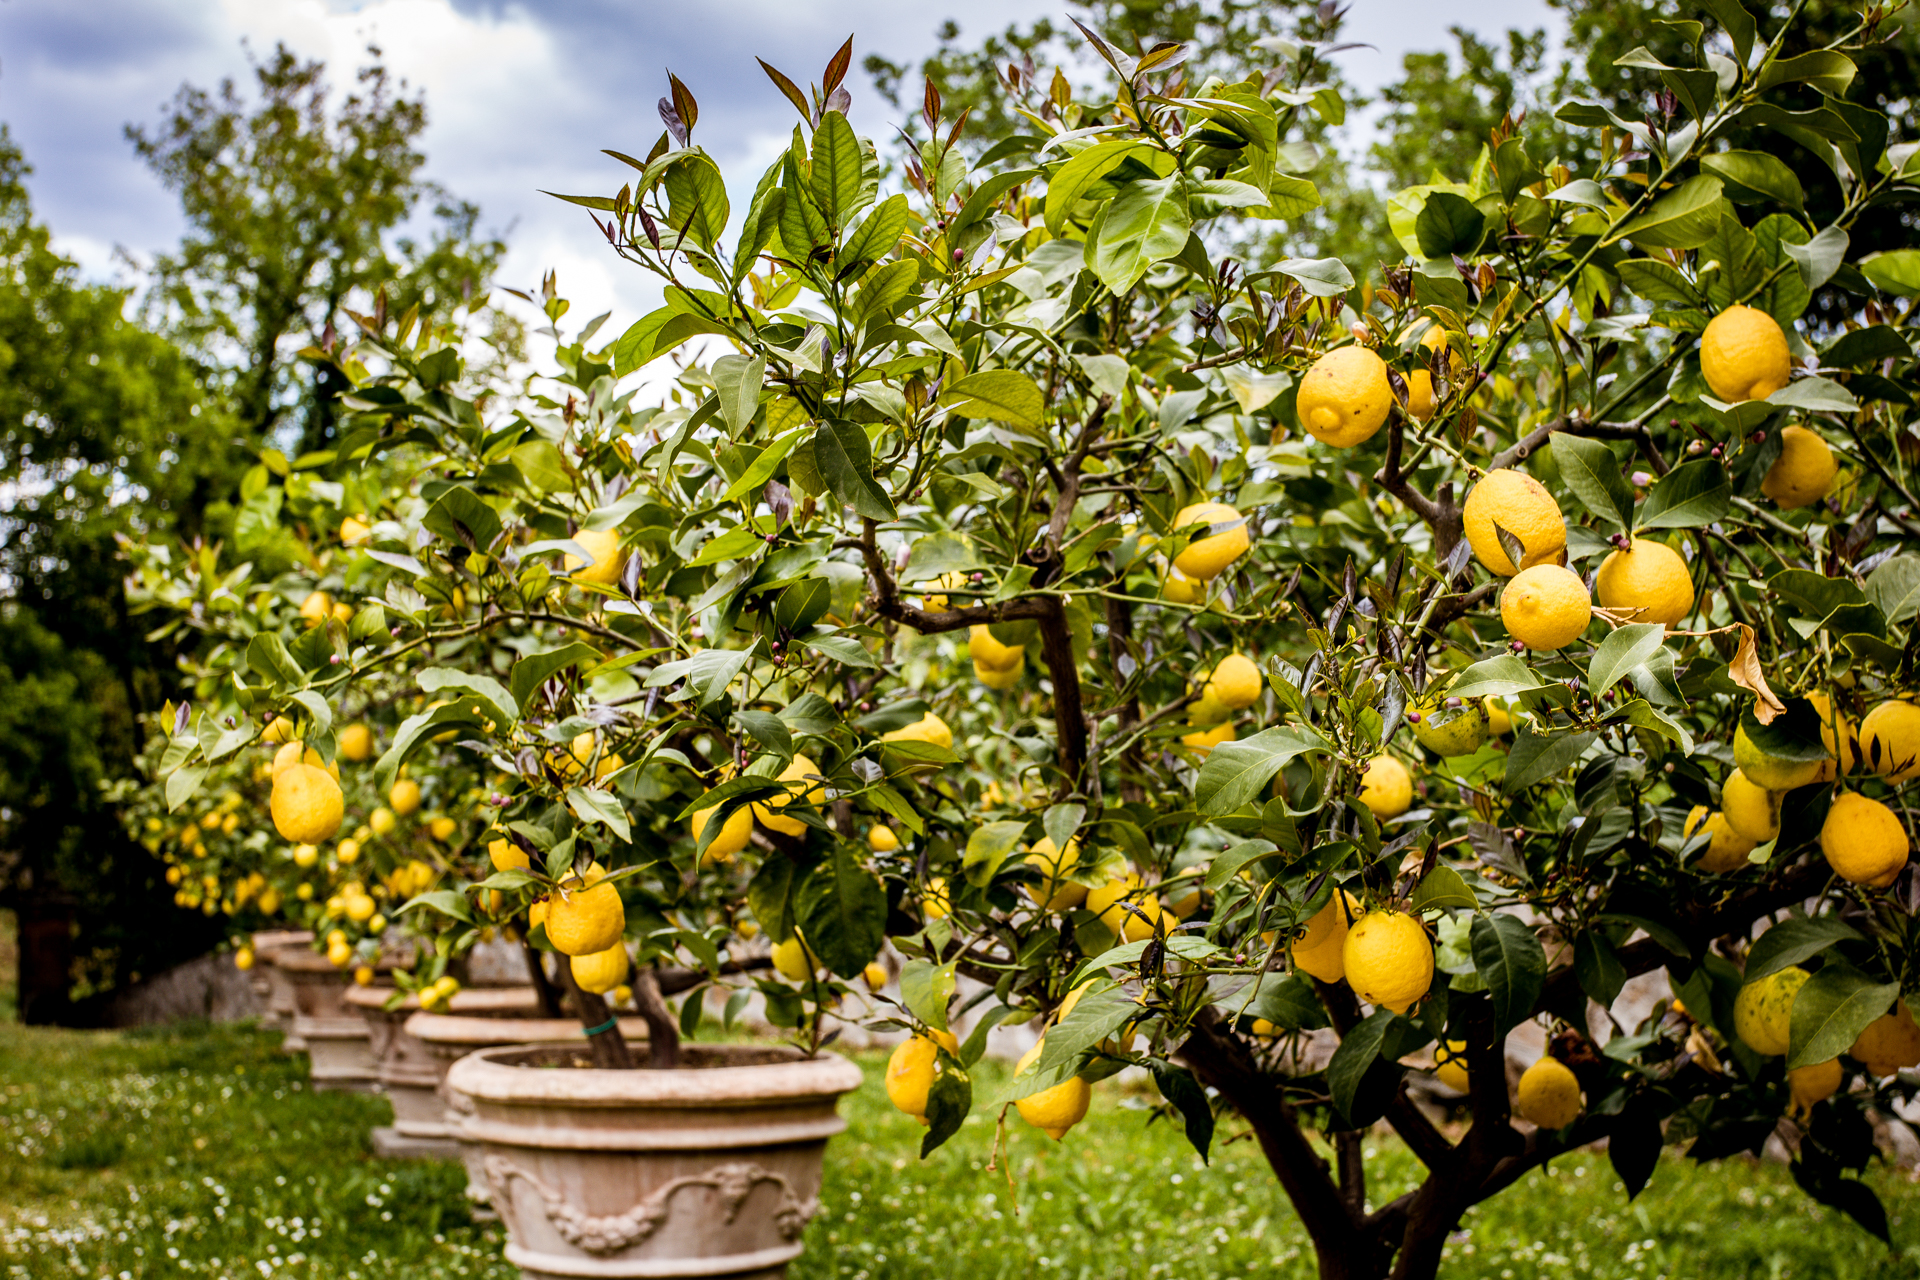 Tuscany Garden Ideas by popular New England travel blogger, Shannon Shipman: image of lemon trees in terracotta pots. 